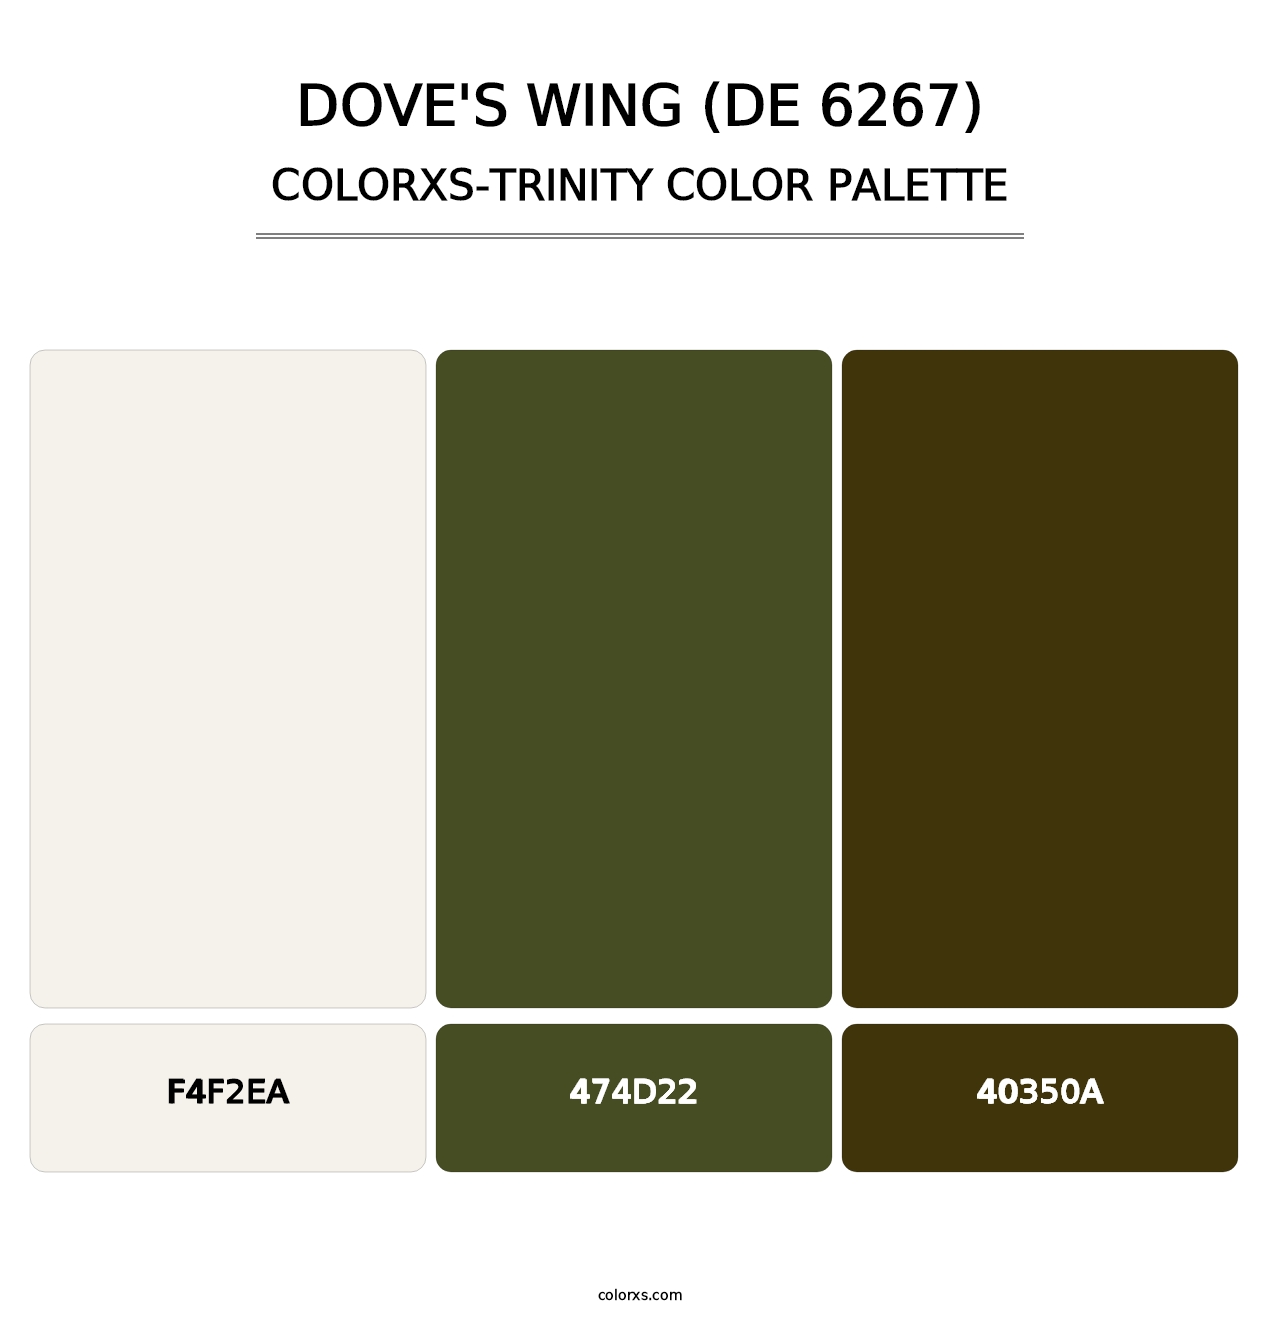 Dove's Wing (DE 6267) - Colorxs Trinity Palette